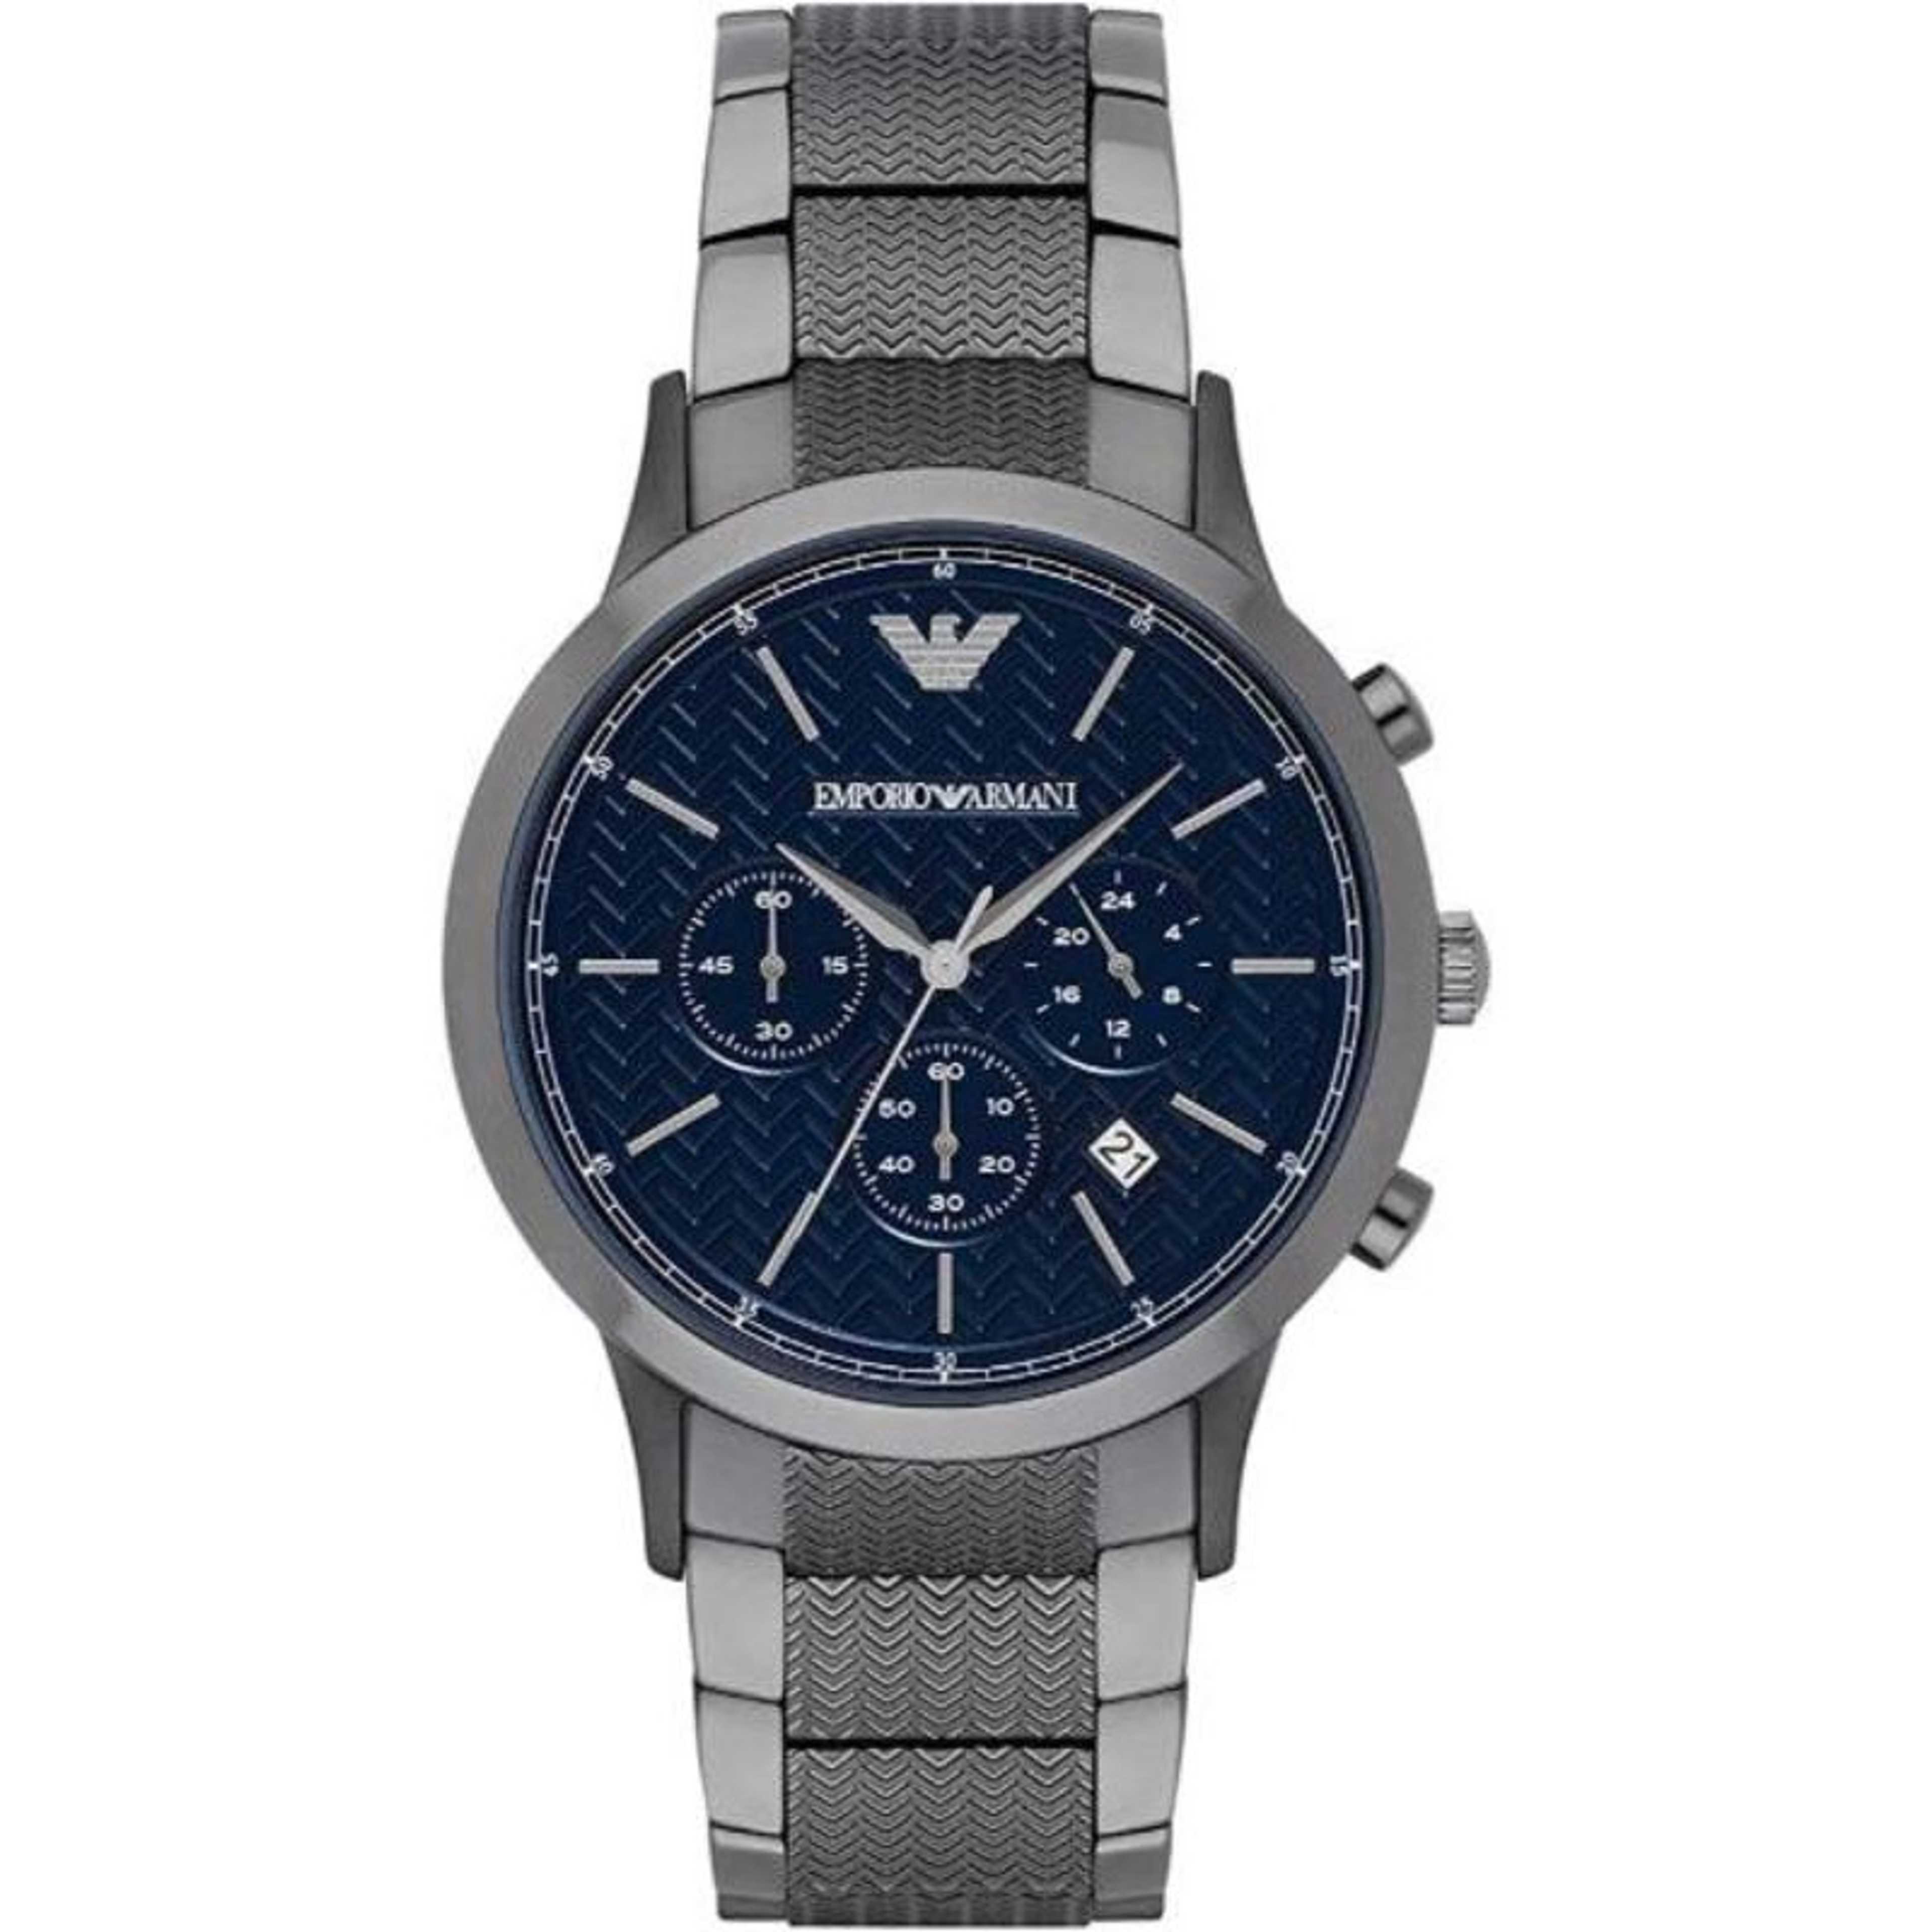 Emporio Armani Renato Gunmetal Stainless Steel Navy Blue Dial Chronograph Quartz Watch for Gents - Emporio Armani AR2505